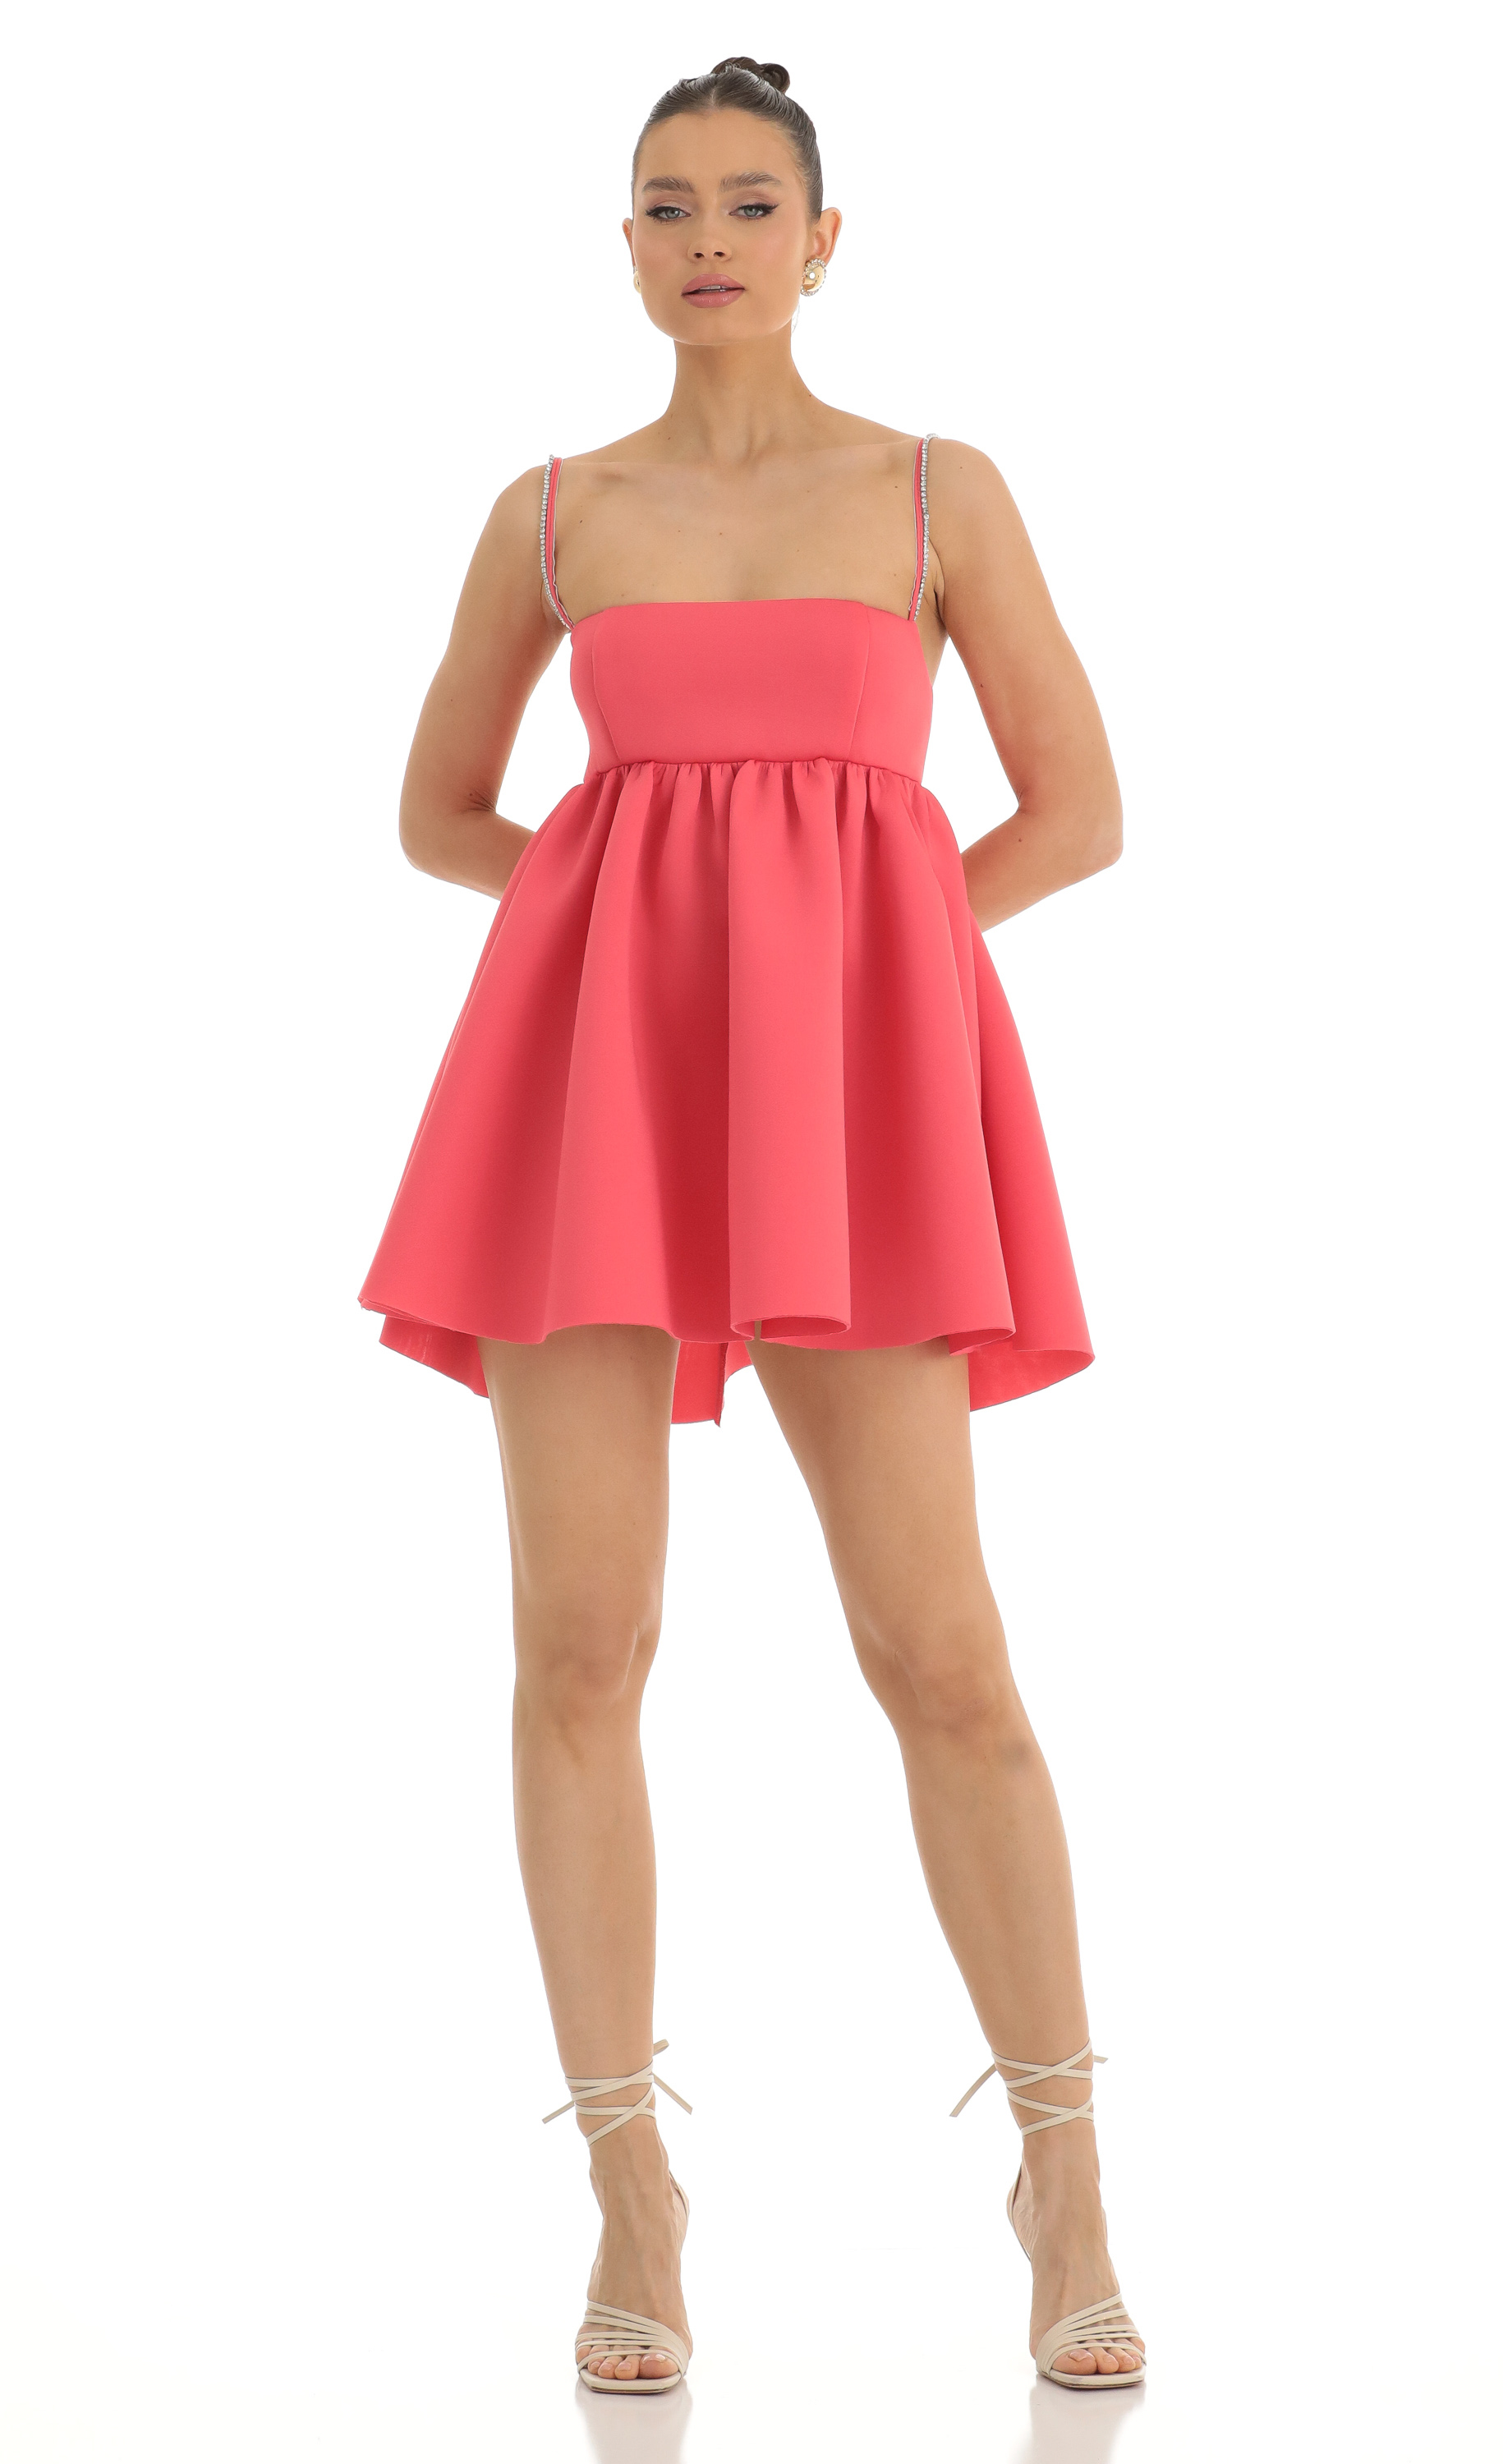 Coco Rhinestone Strap Baby Doll Dress in Pink